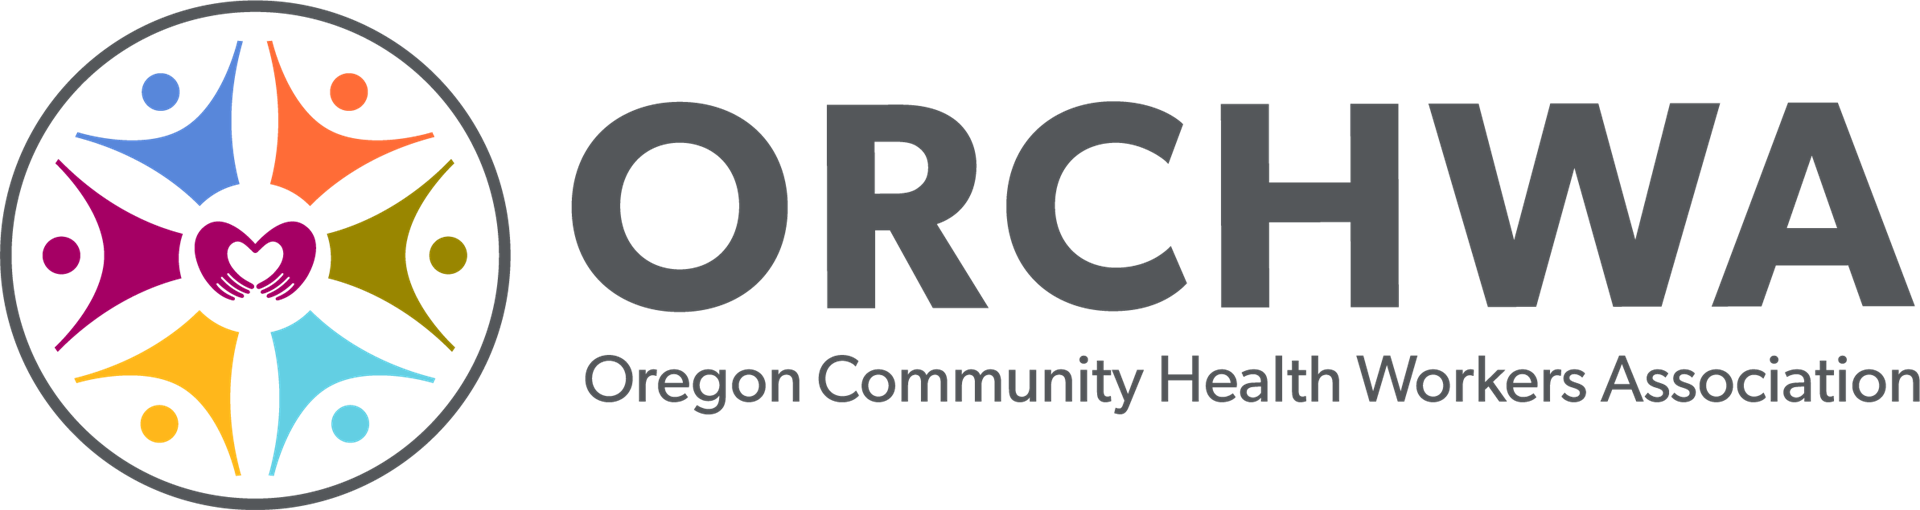 Logo: ORCHWA | Oregon Community Health Workers Association